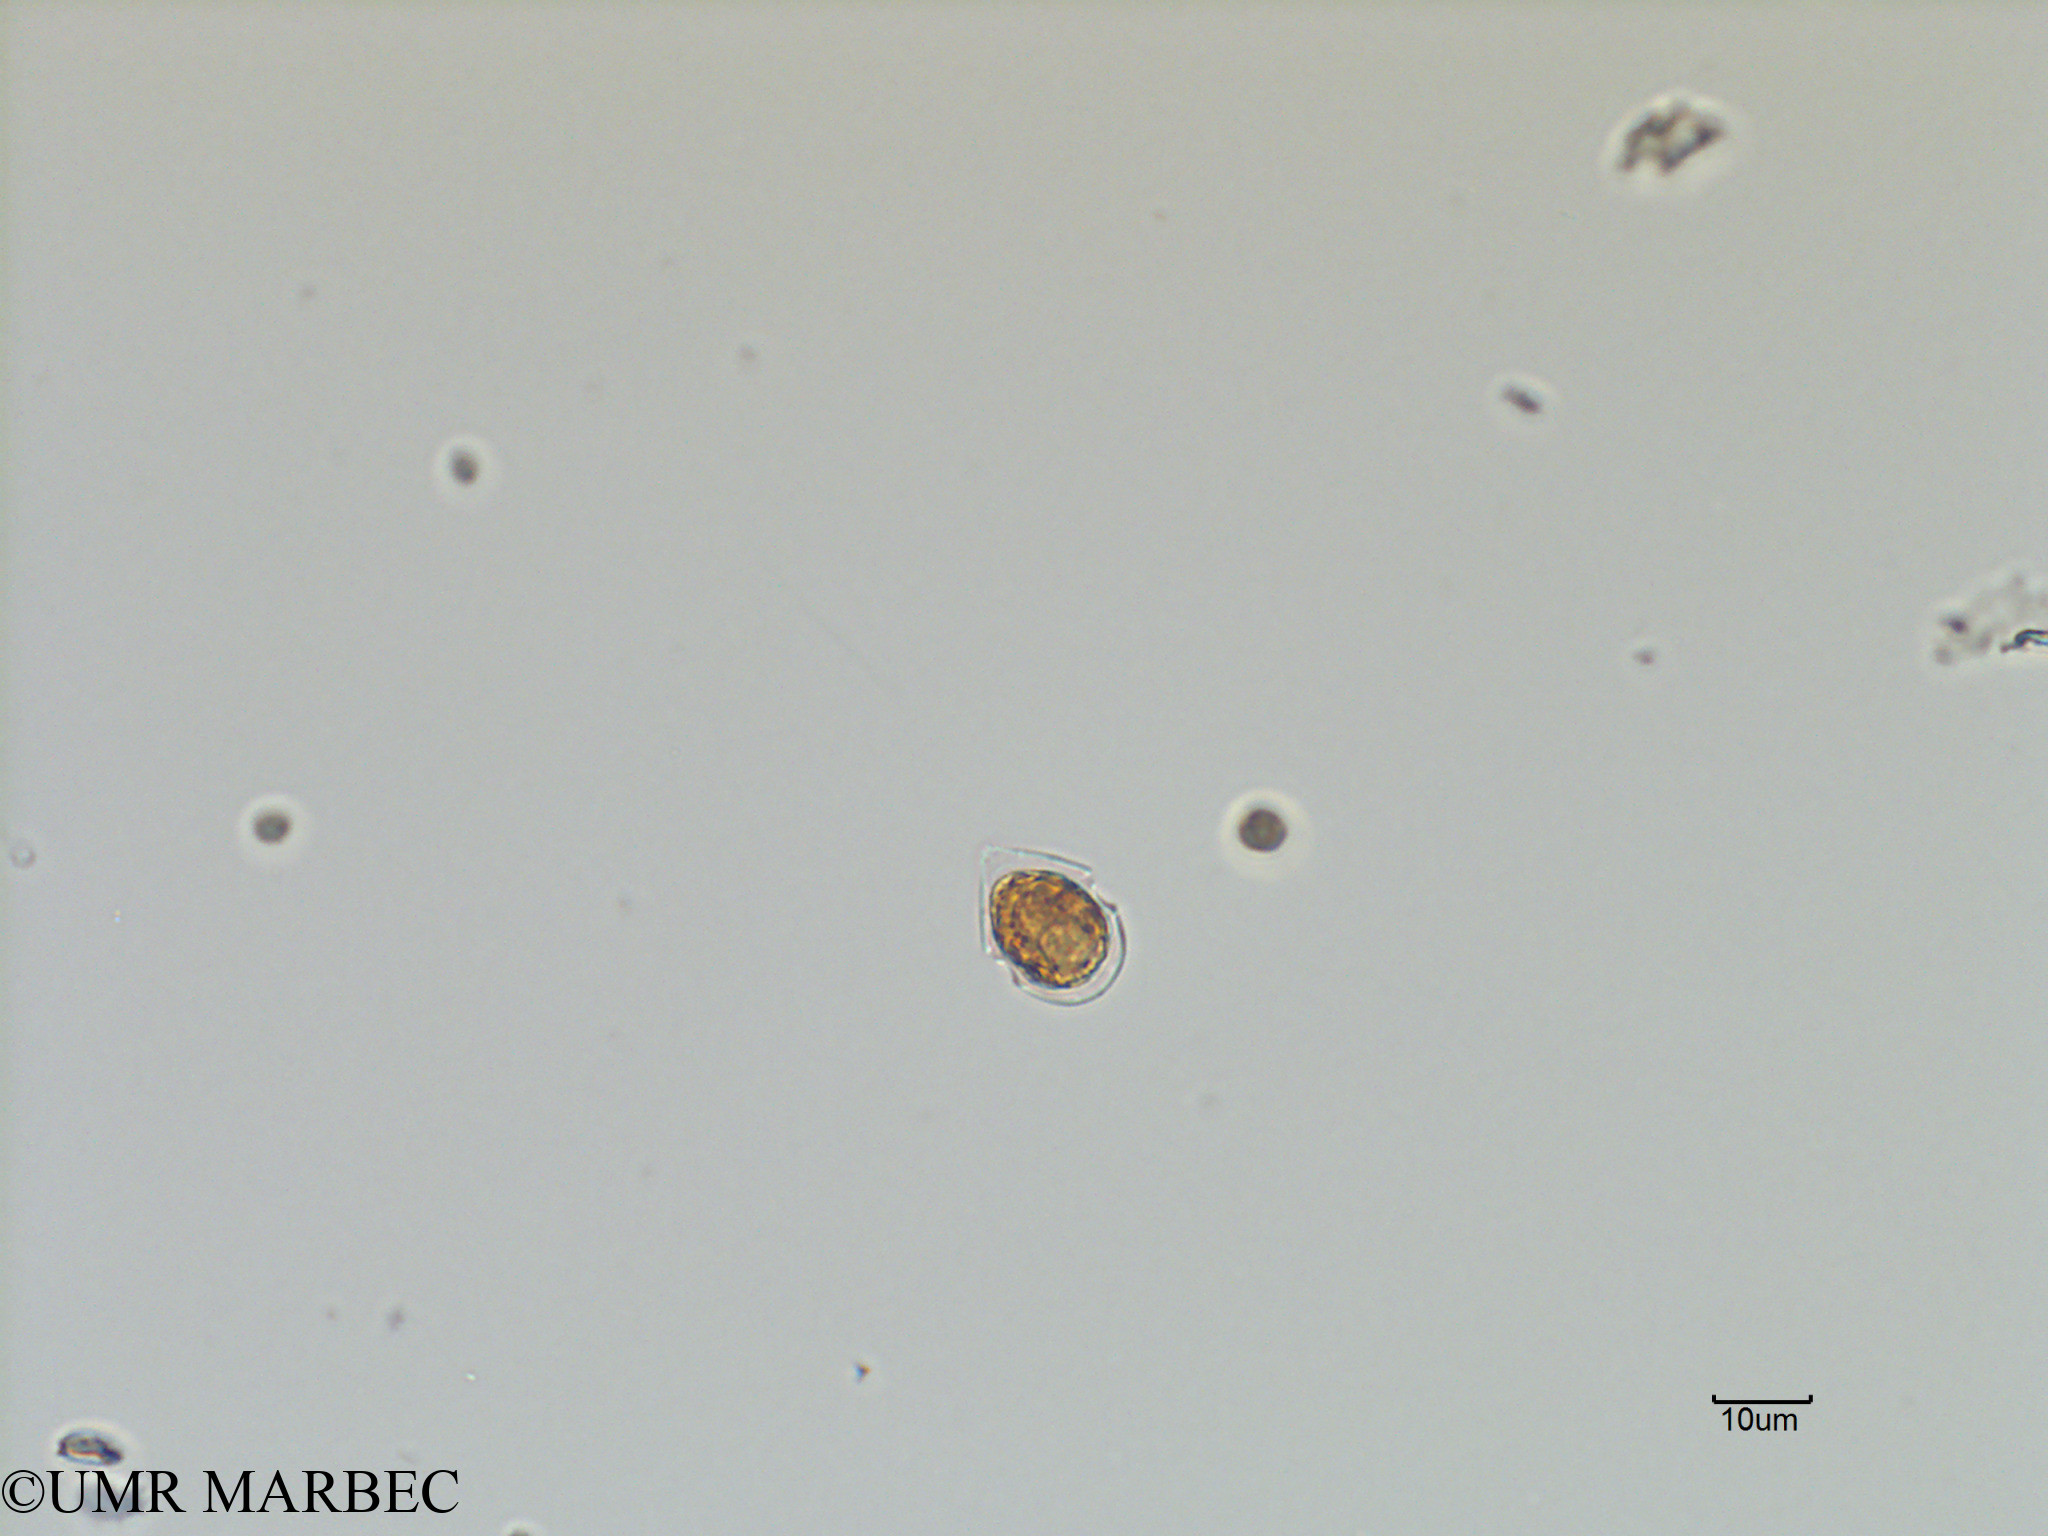 phyto/Scattered_Islands/iles_glorieuses/SIREME November 2015/Scrippsiella spp (SIREME-Glorieuses2015-ech1-171116-Scrippsiella-3)(copy).jpg